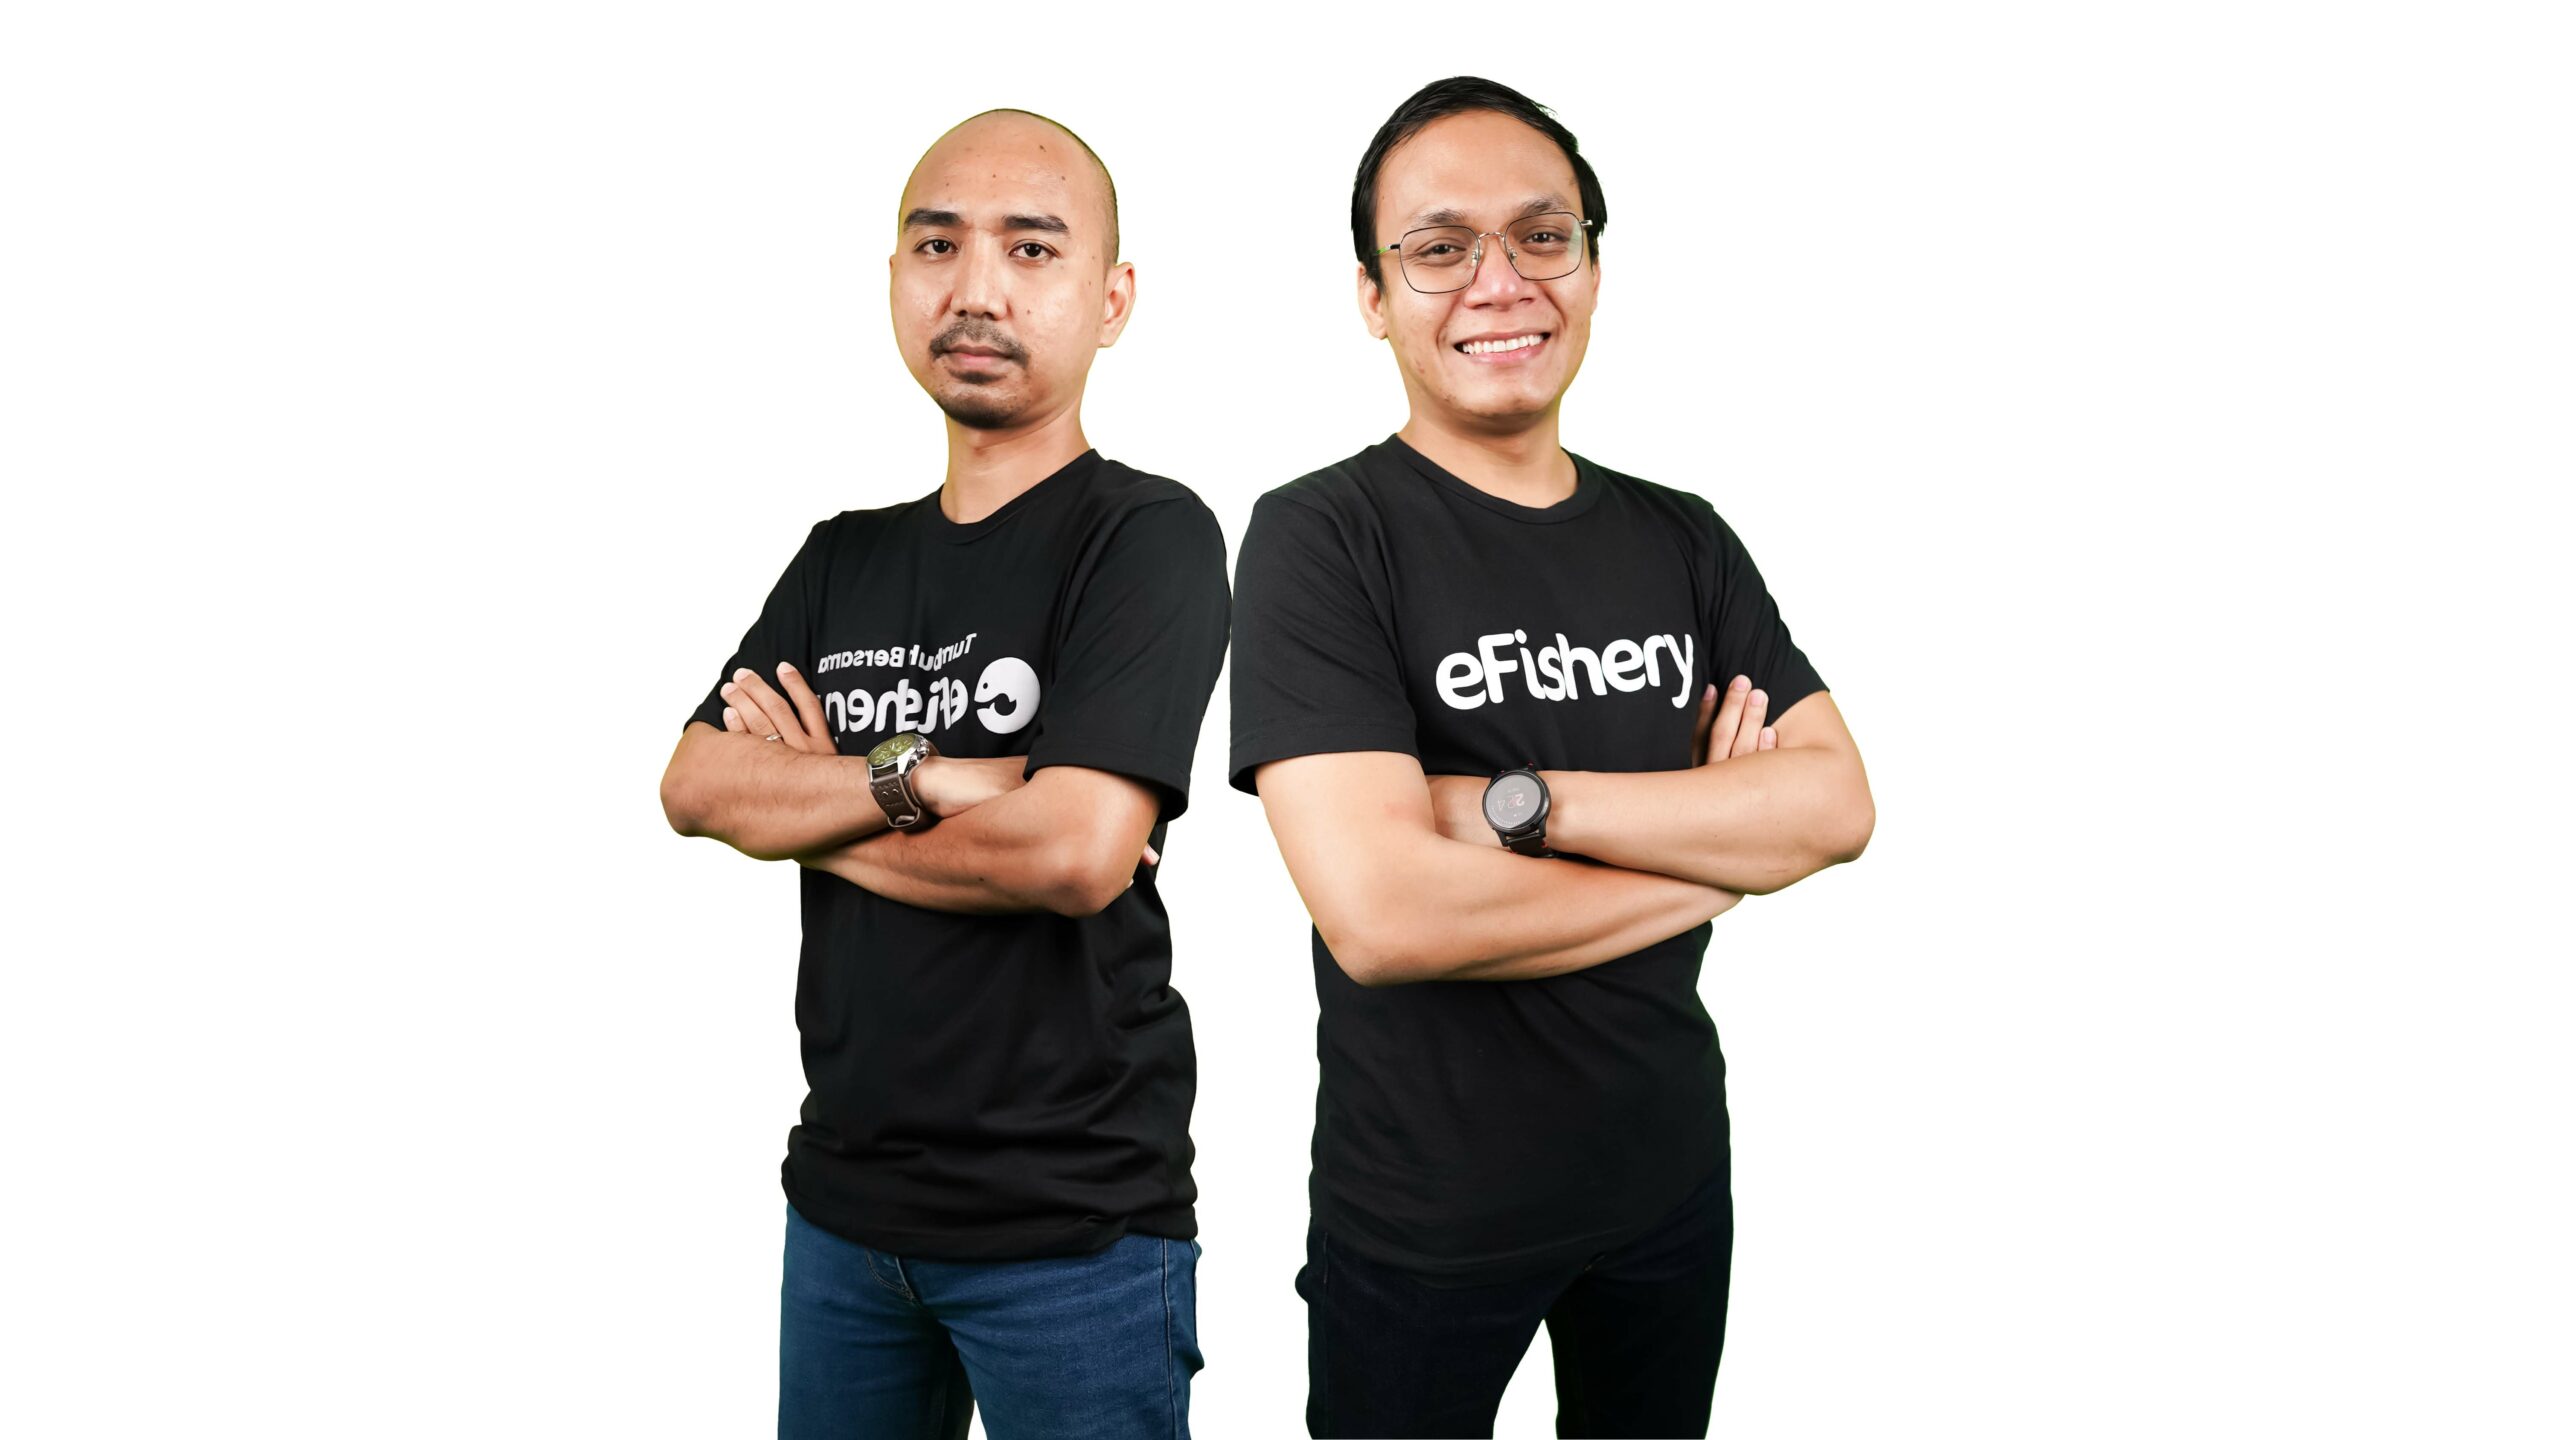 eFishery founders